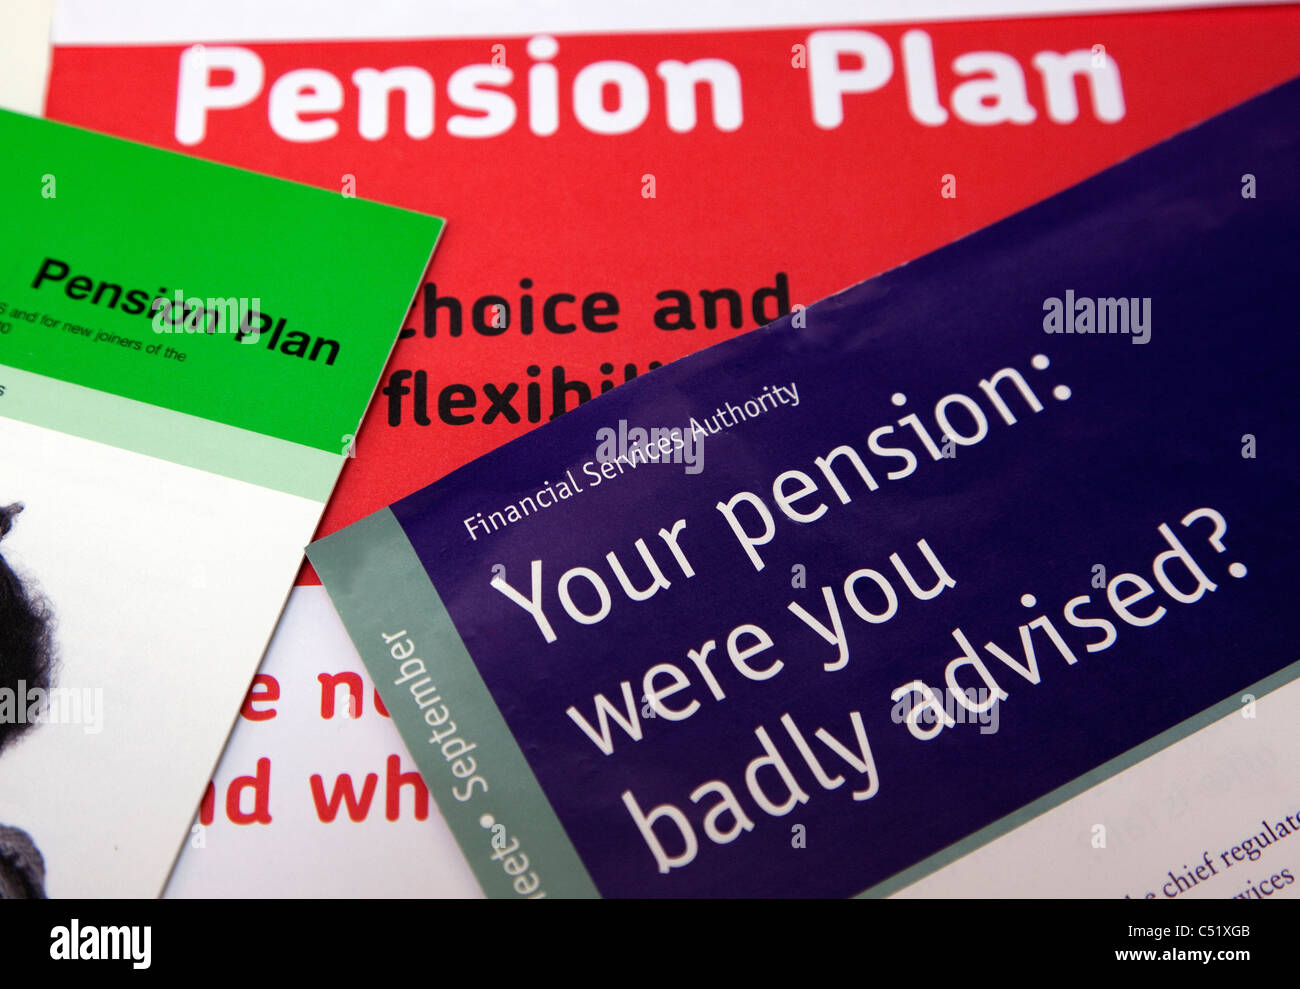 Pensions plans information literature, London Stock Photo